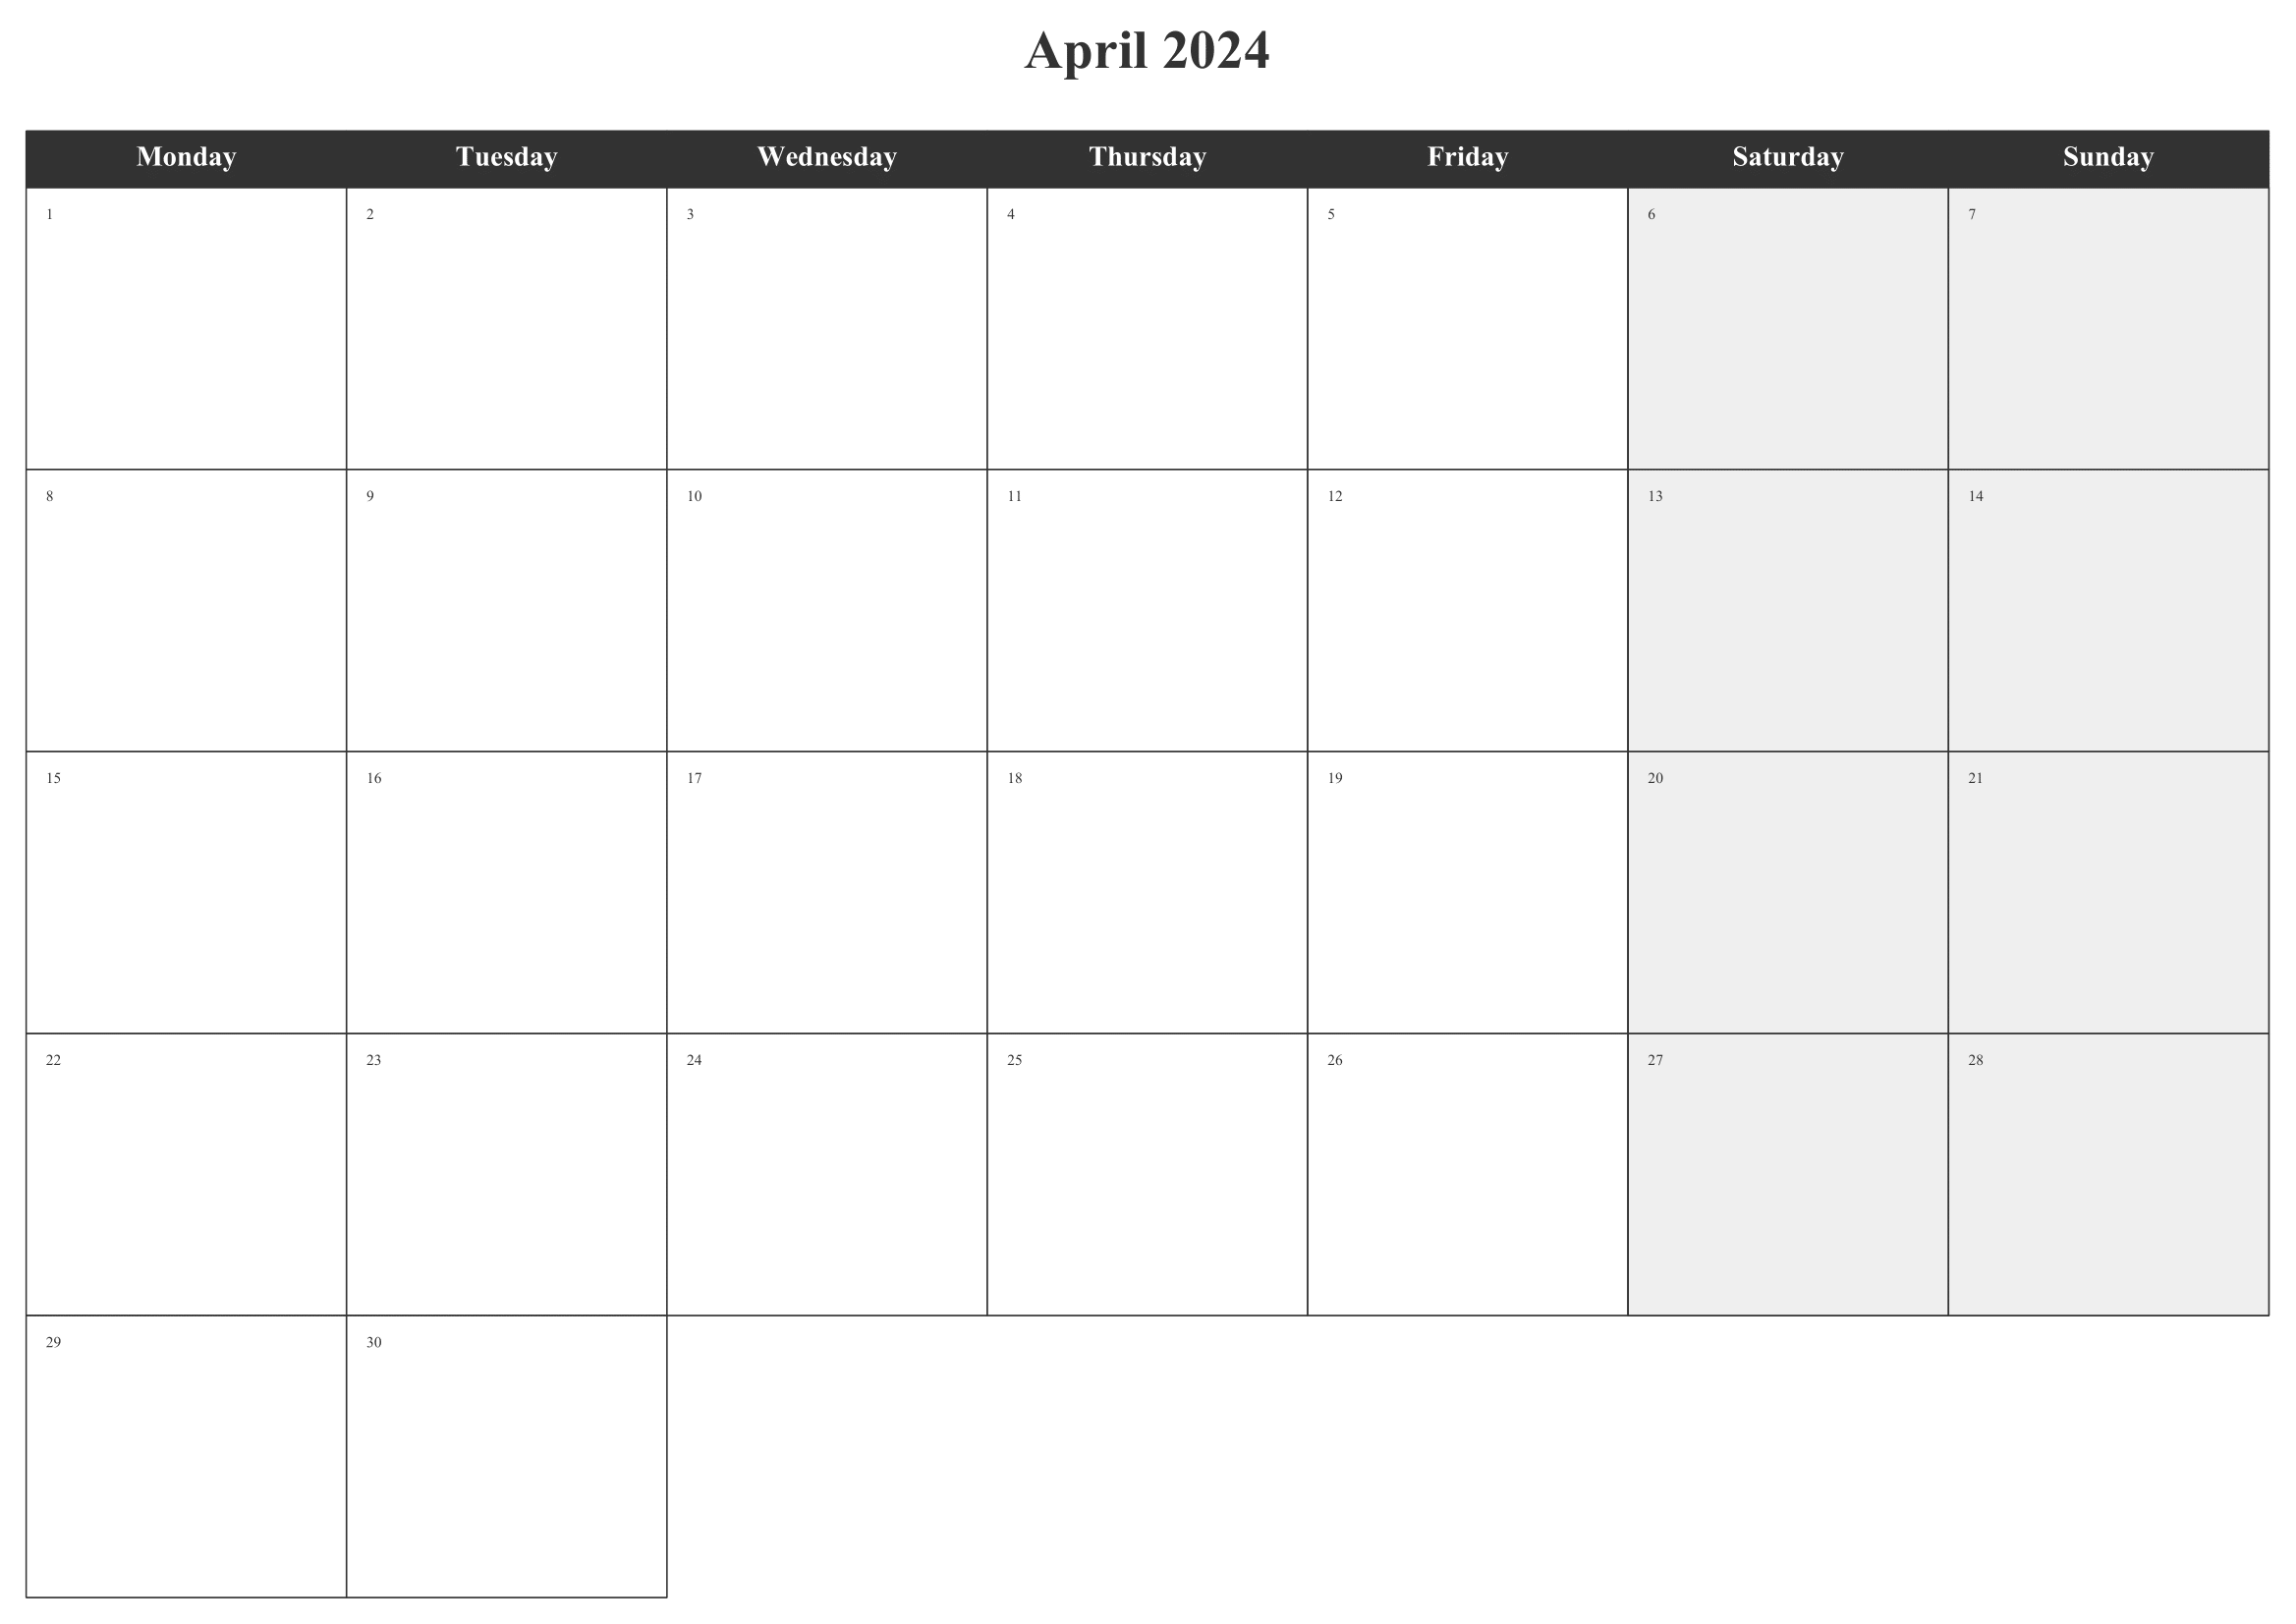 Monthly calendar - Default settings